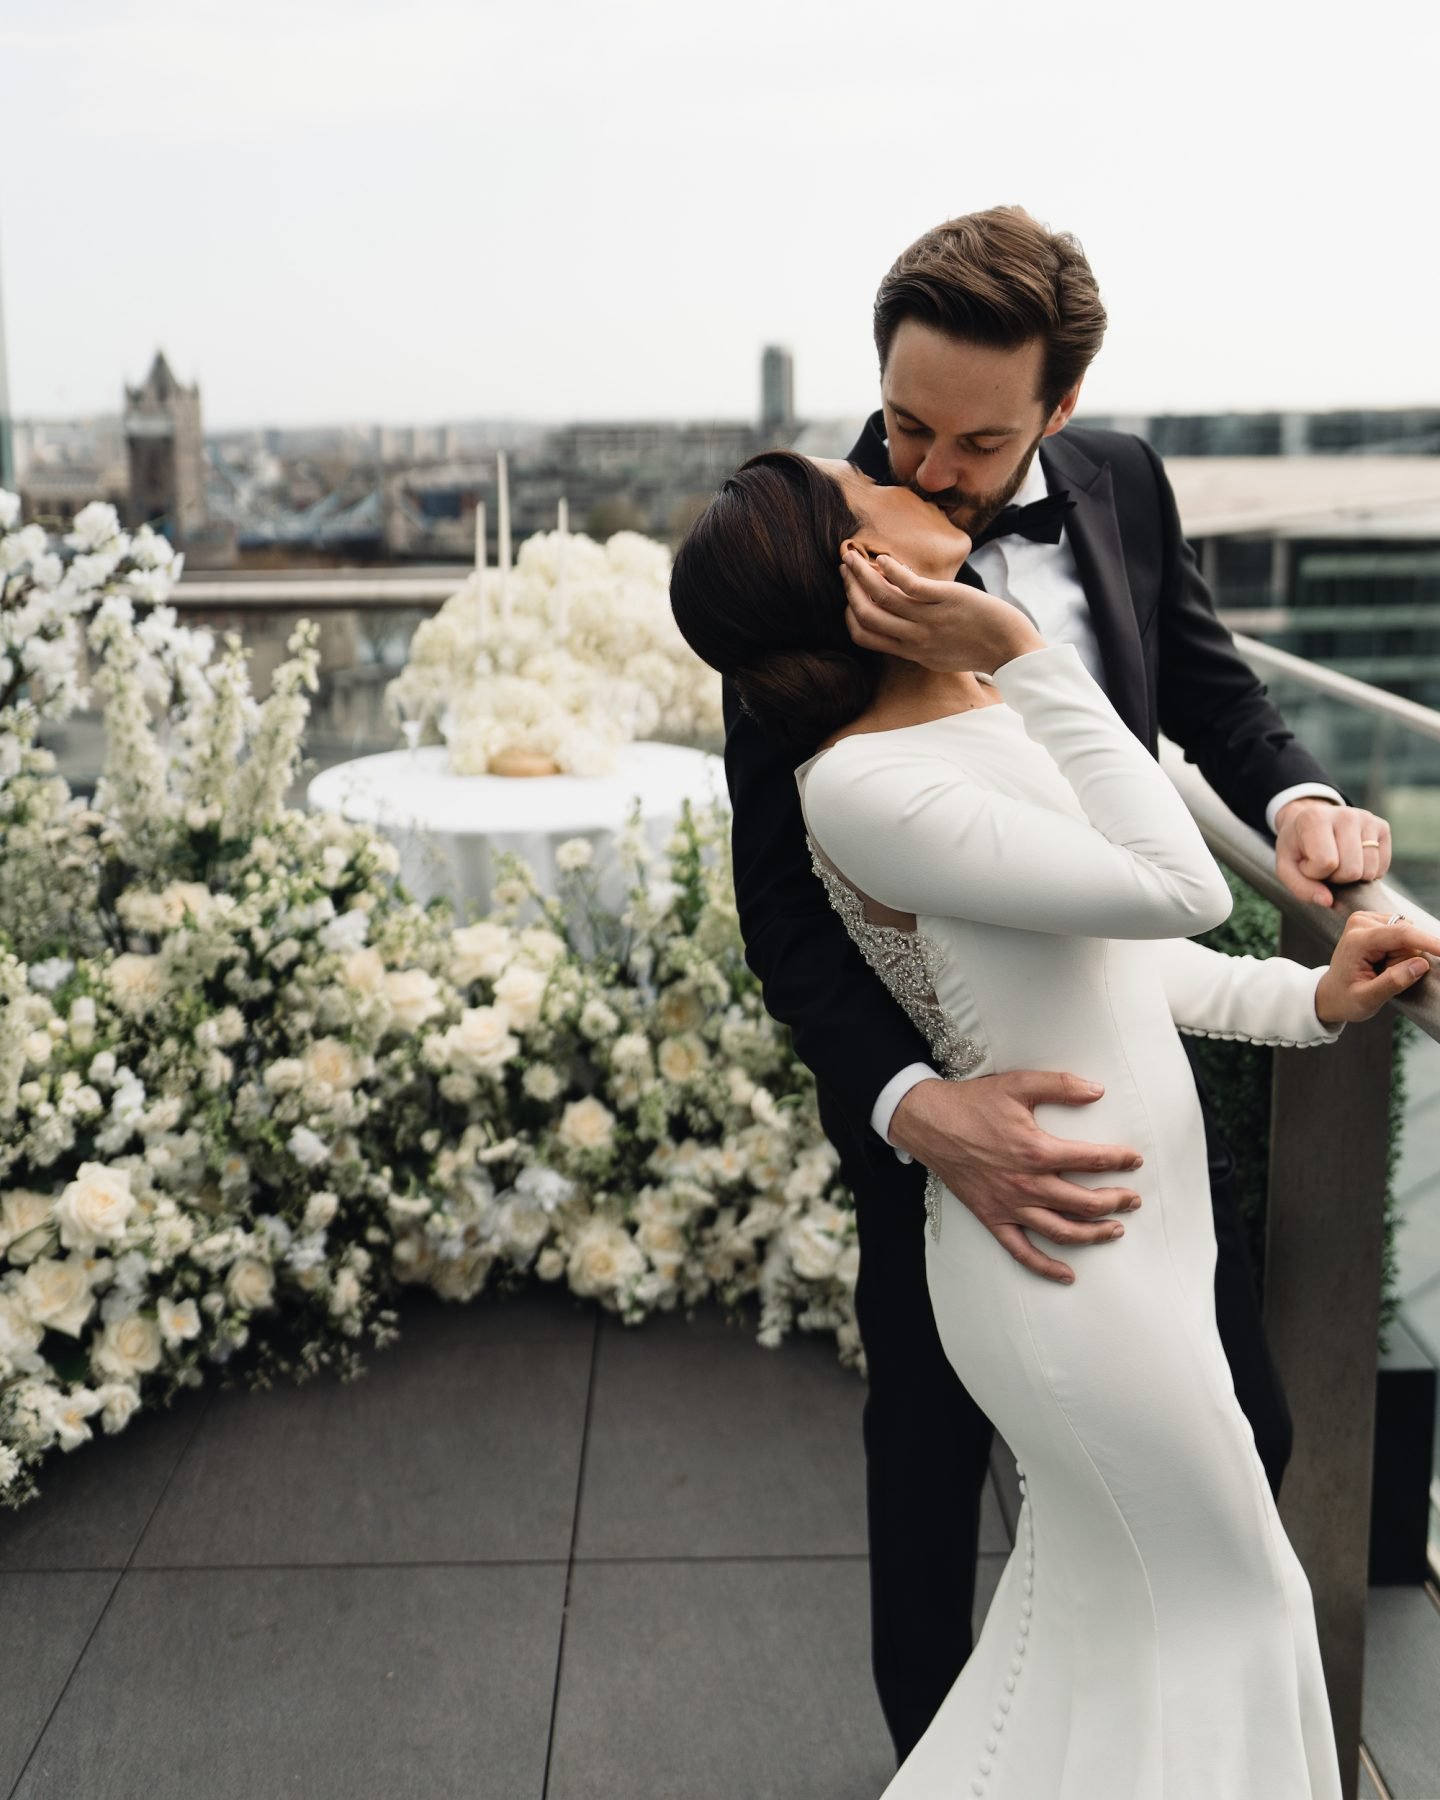 Luxe-London-Wedding16-1440x1800.jpg